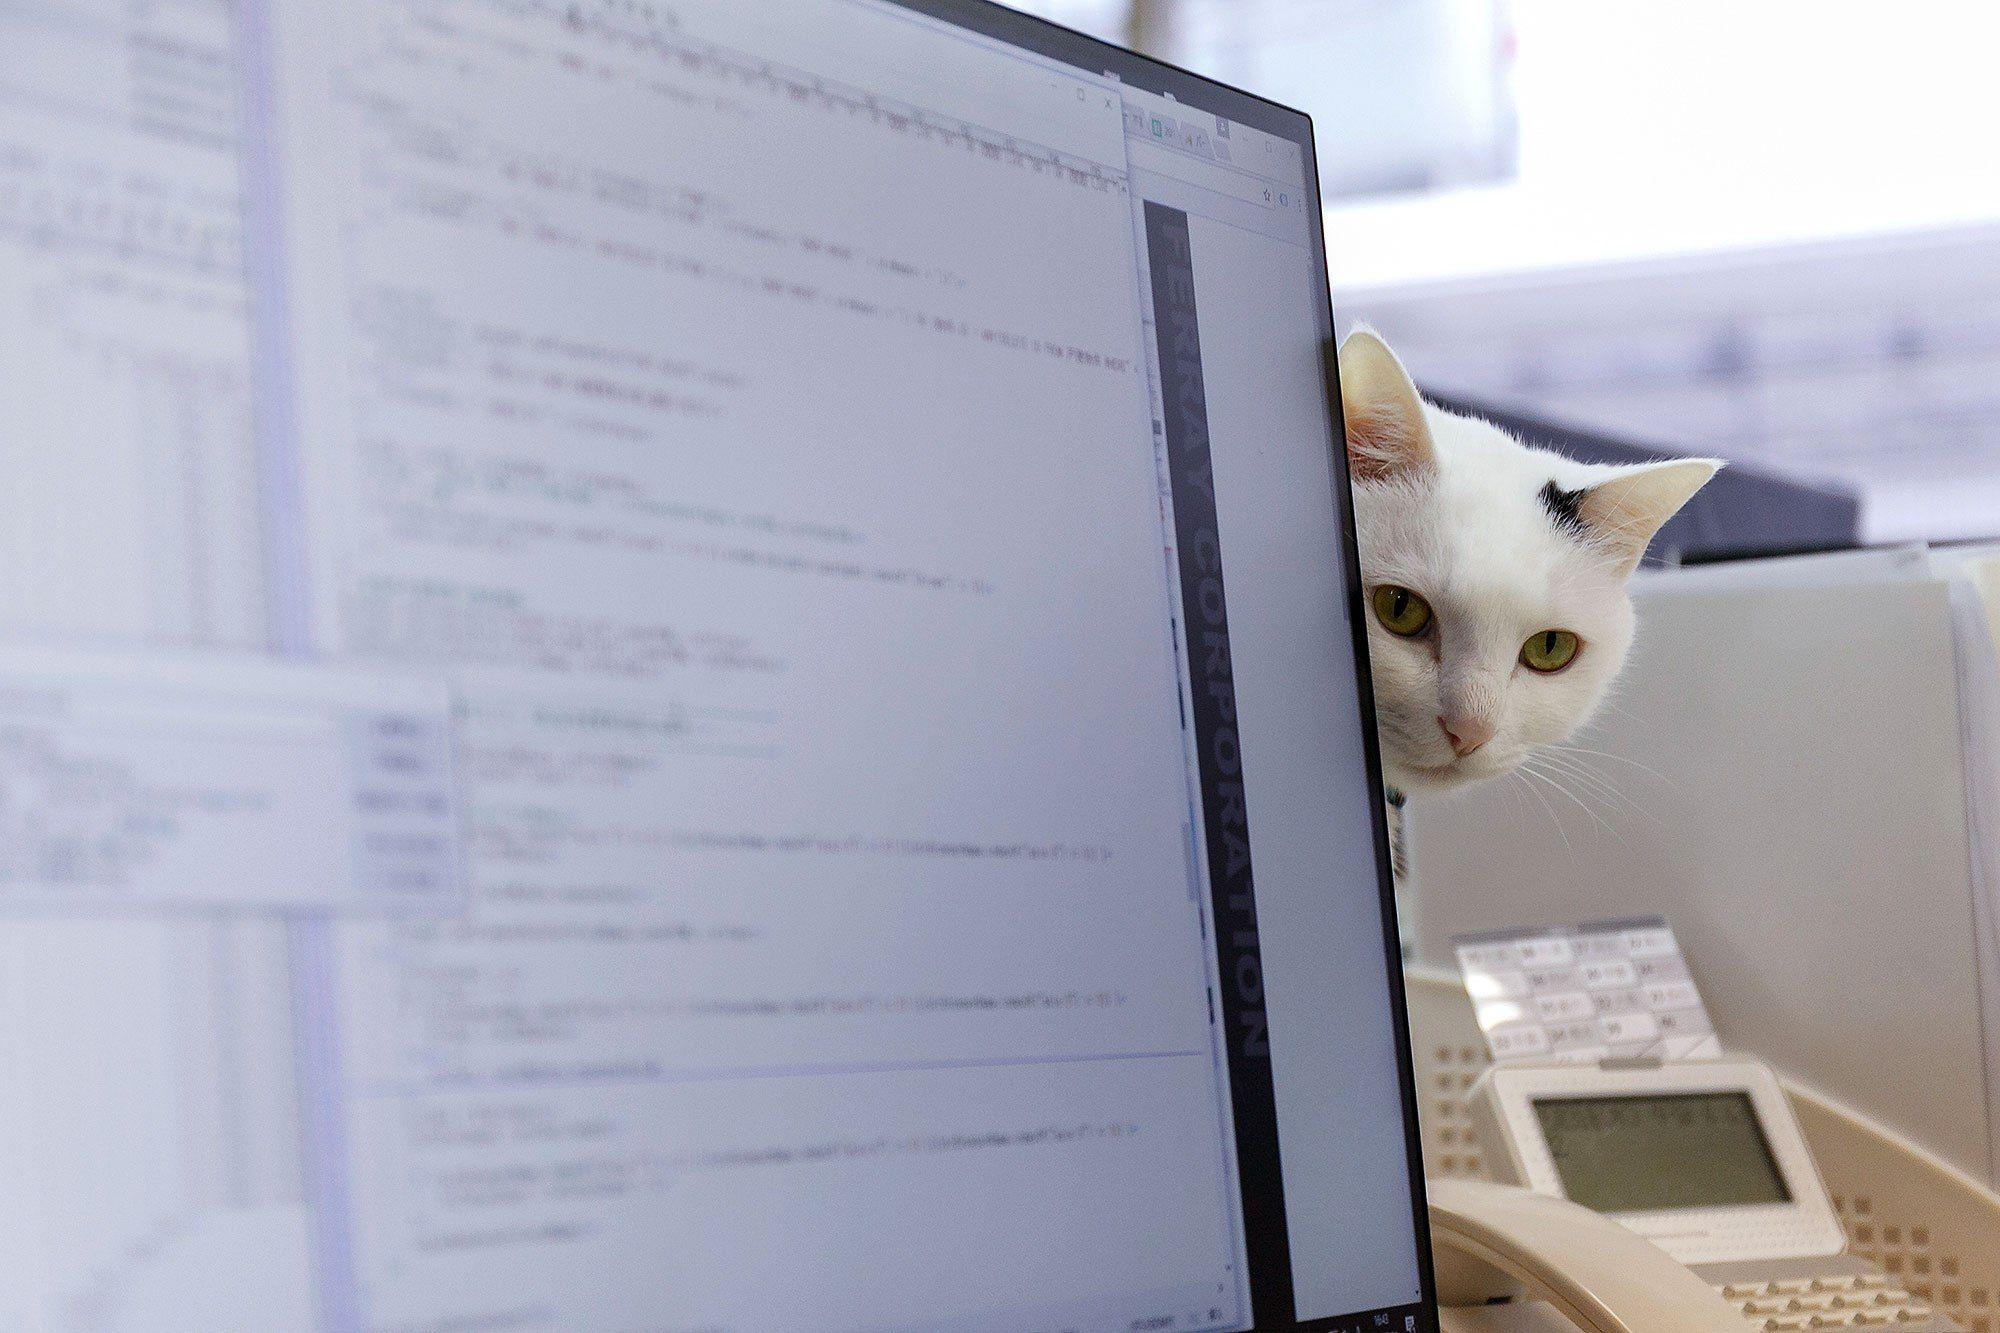 kot skrywa się za monitorem"